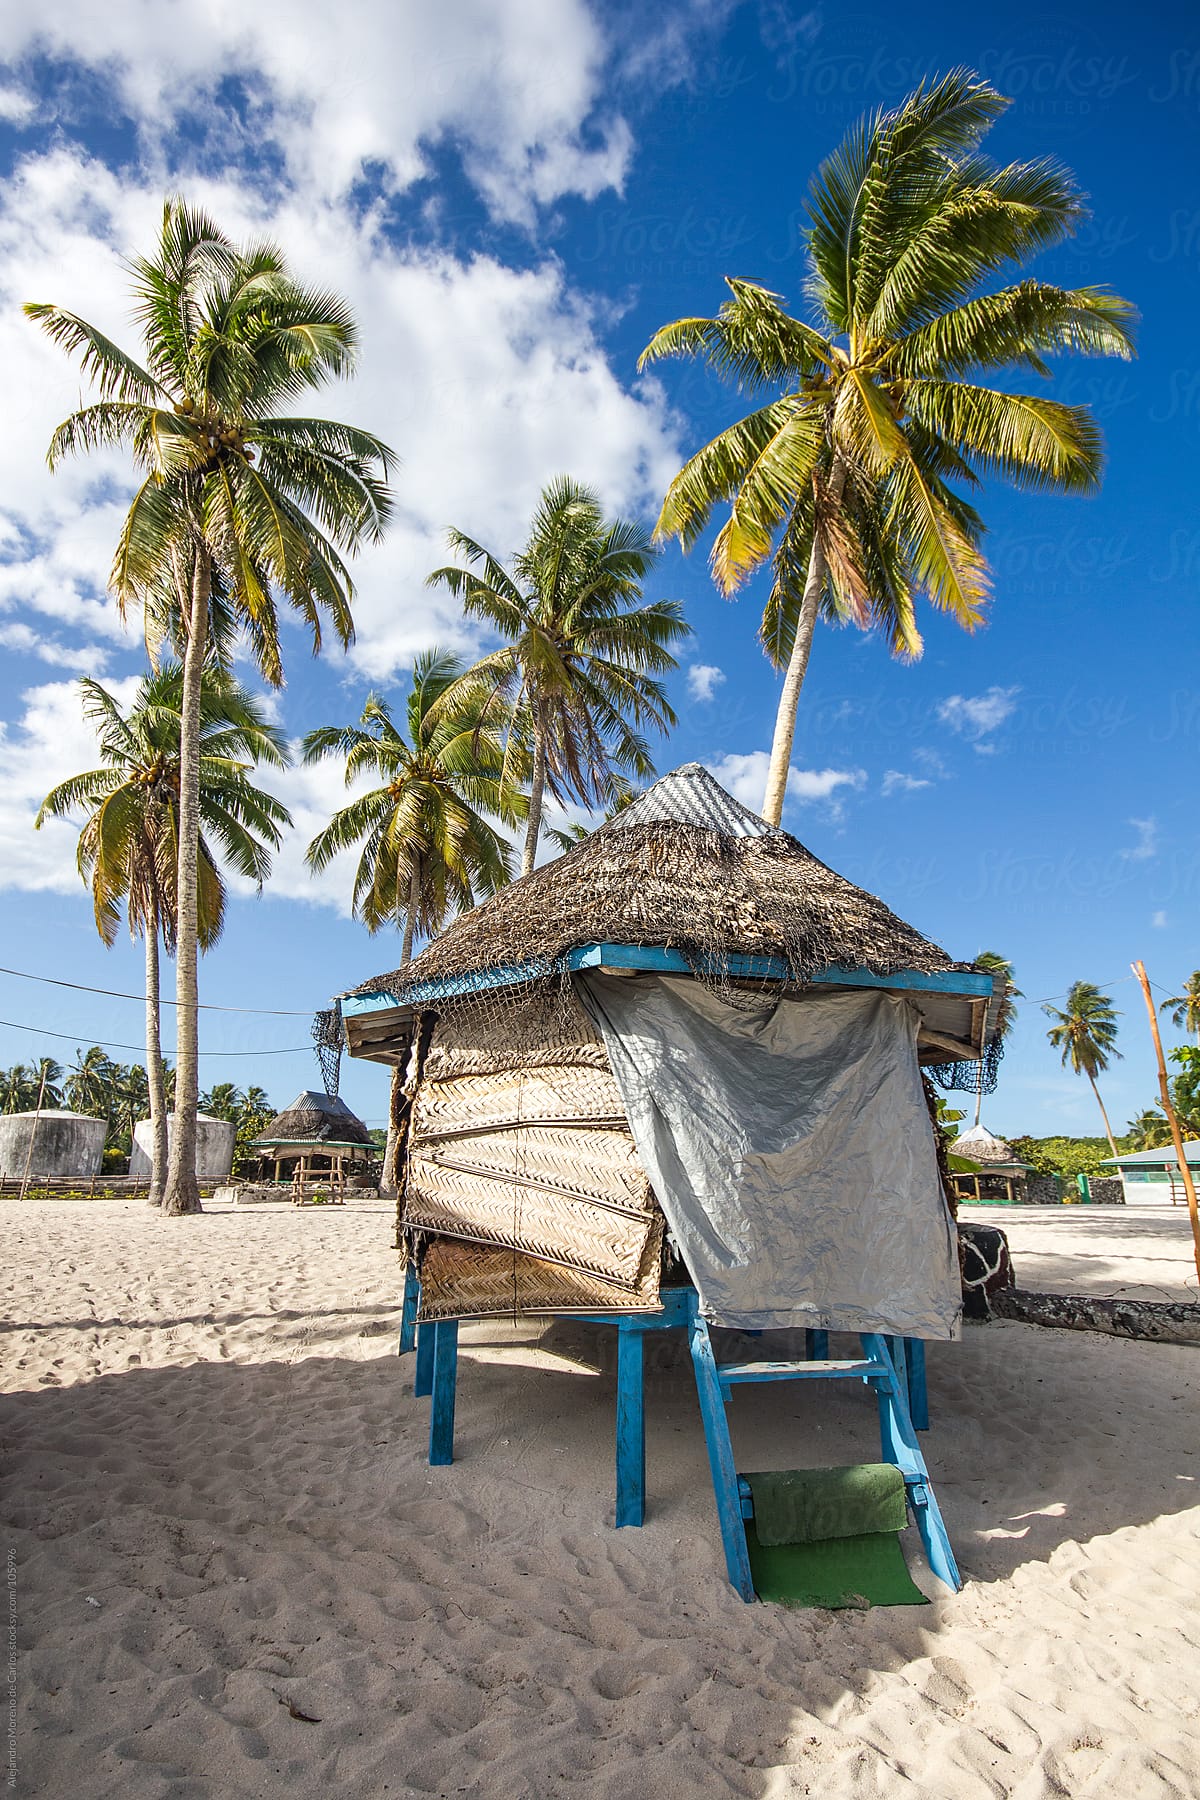 Beach Hut On Tropical Island By Stocksy Contributor Alejandro Moreno De Carlos Stocksy